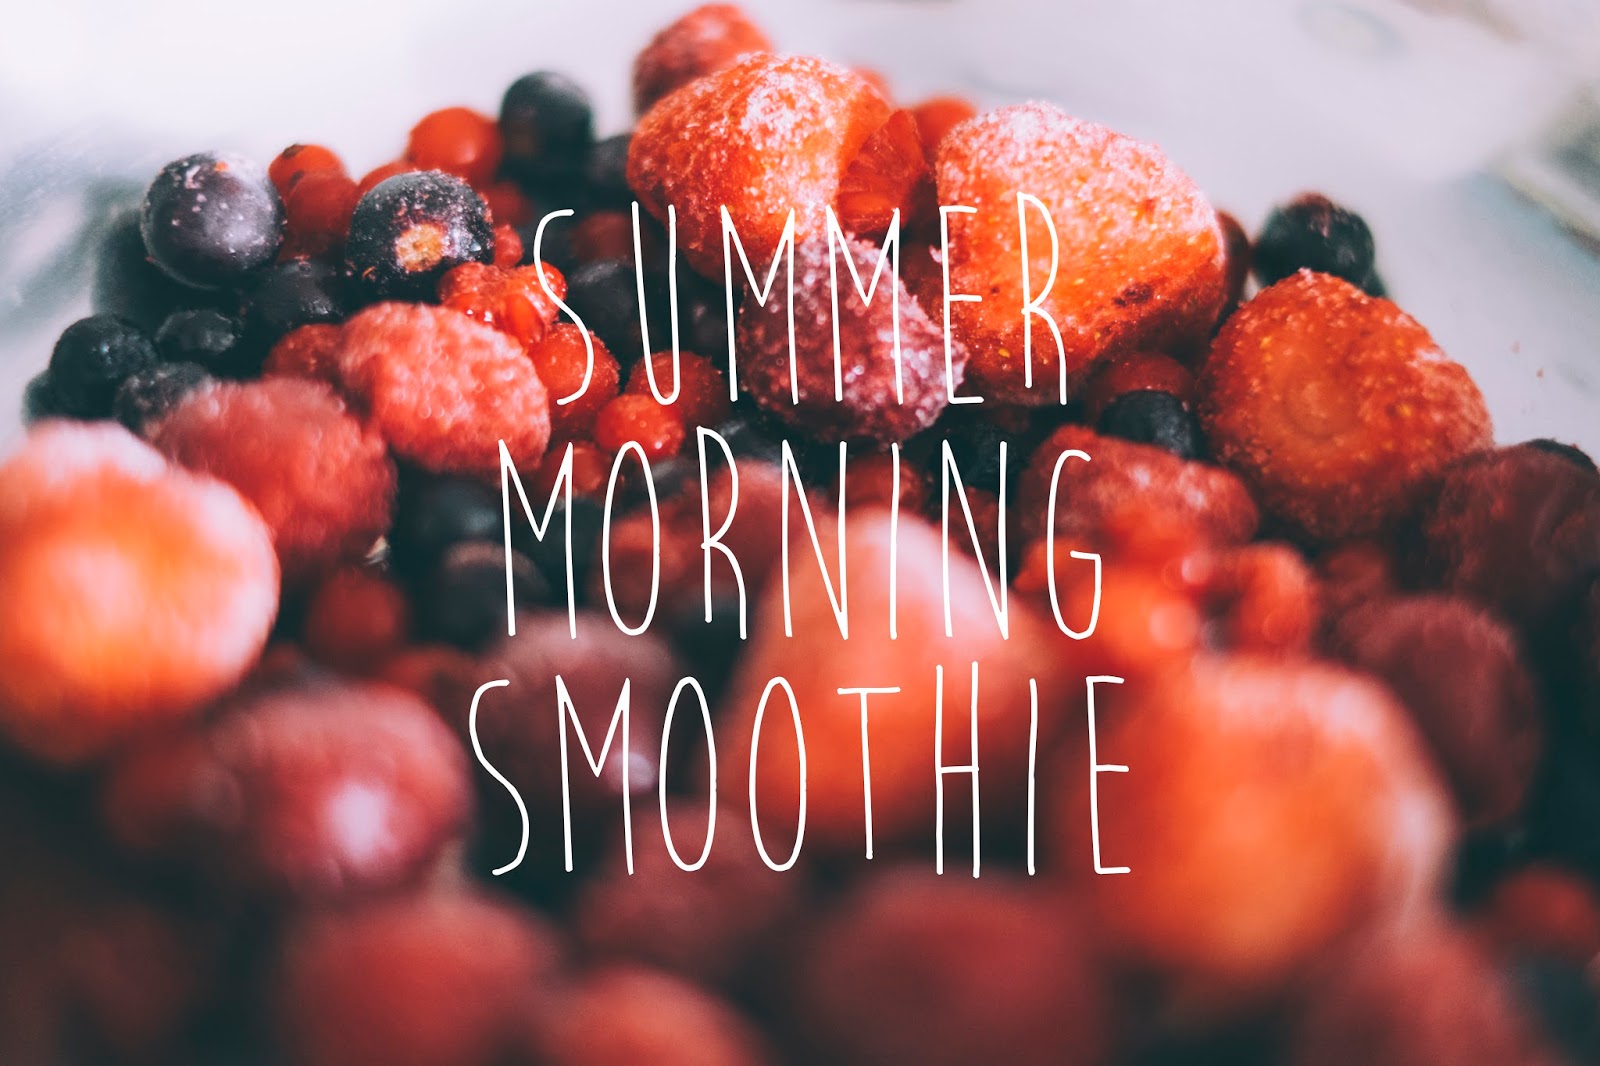 My Summer Morning Smoothie Recipe